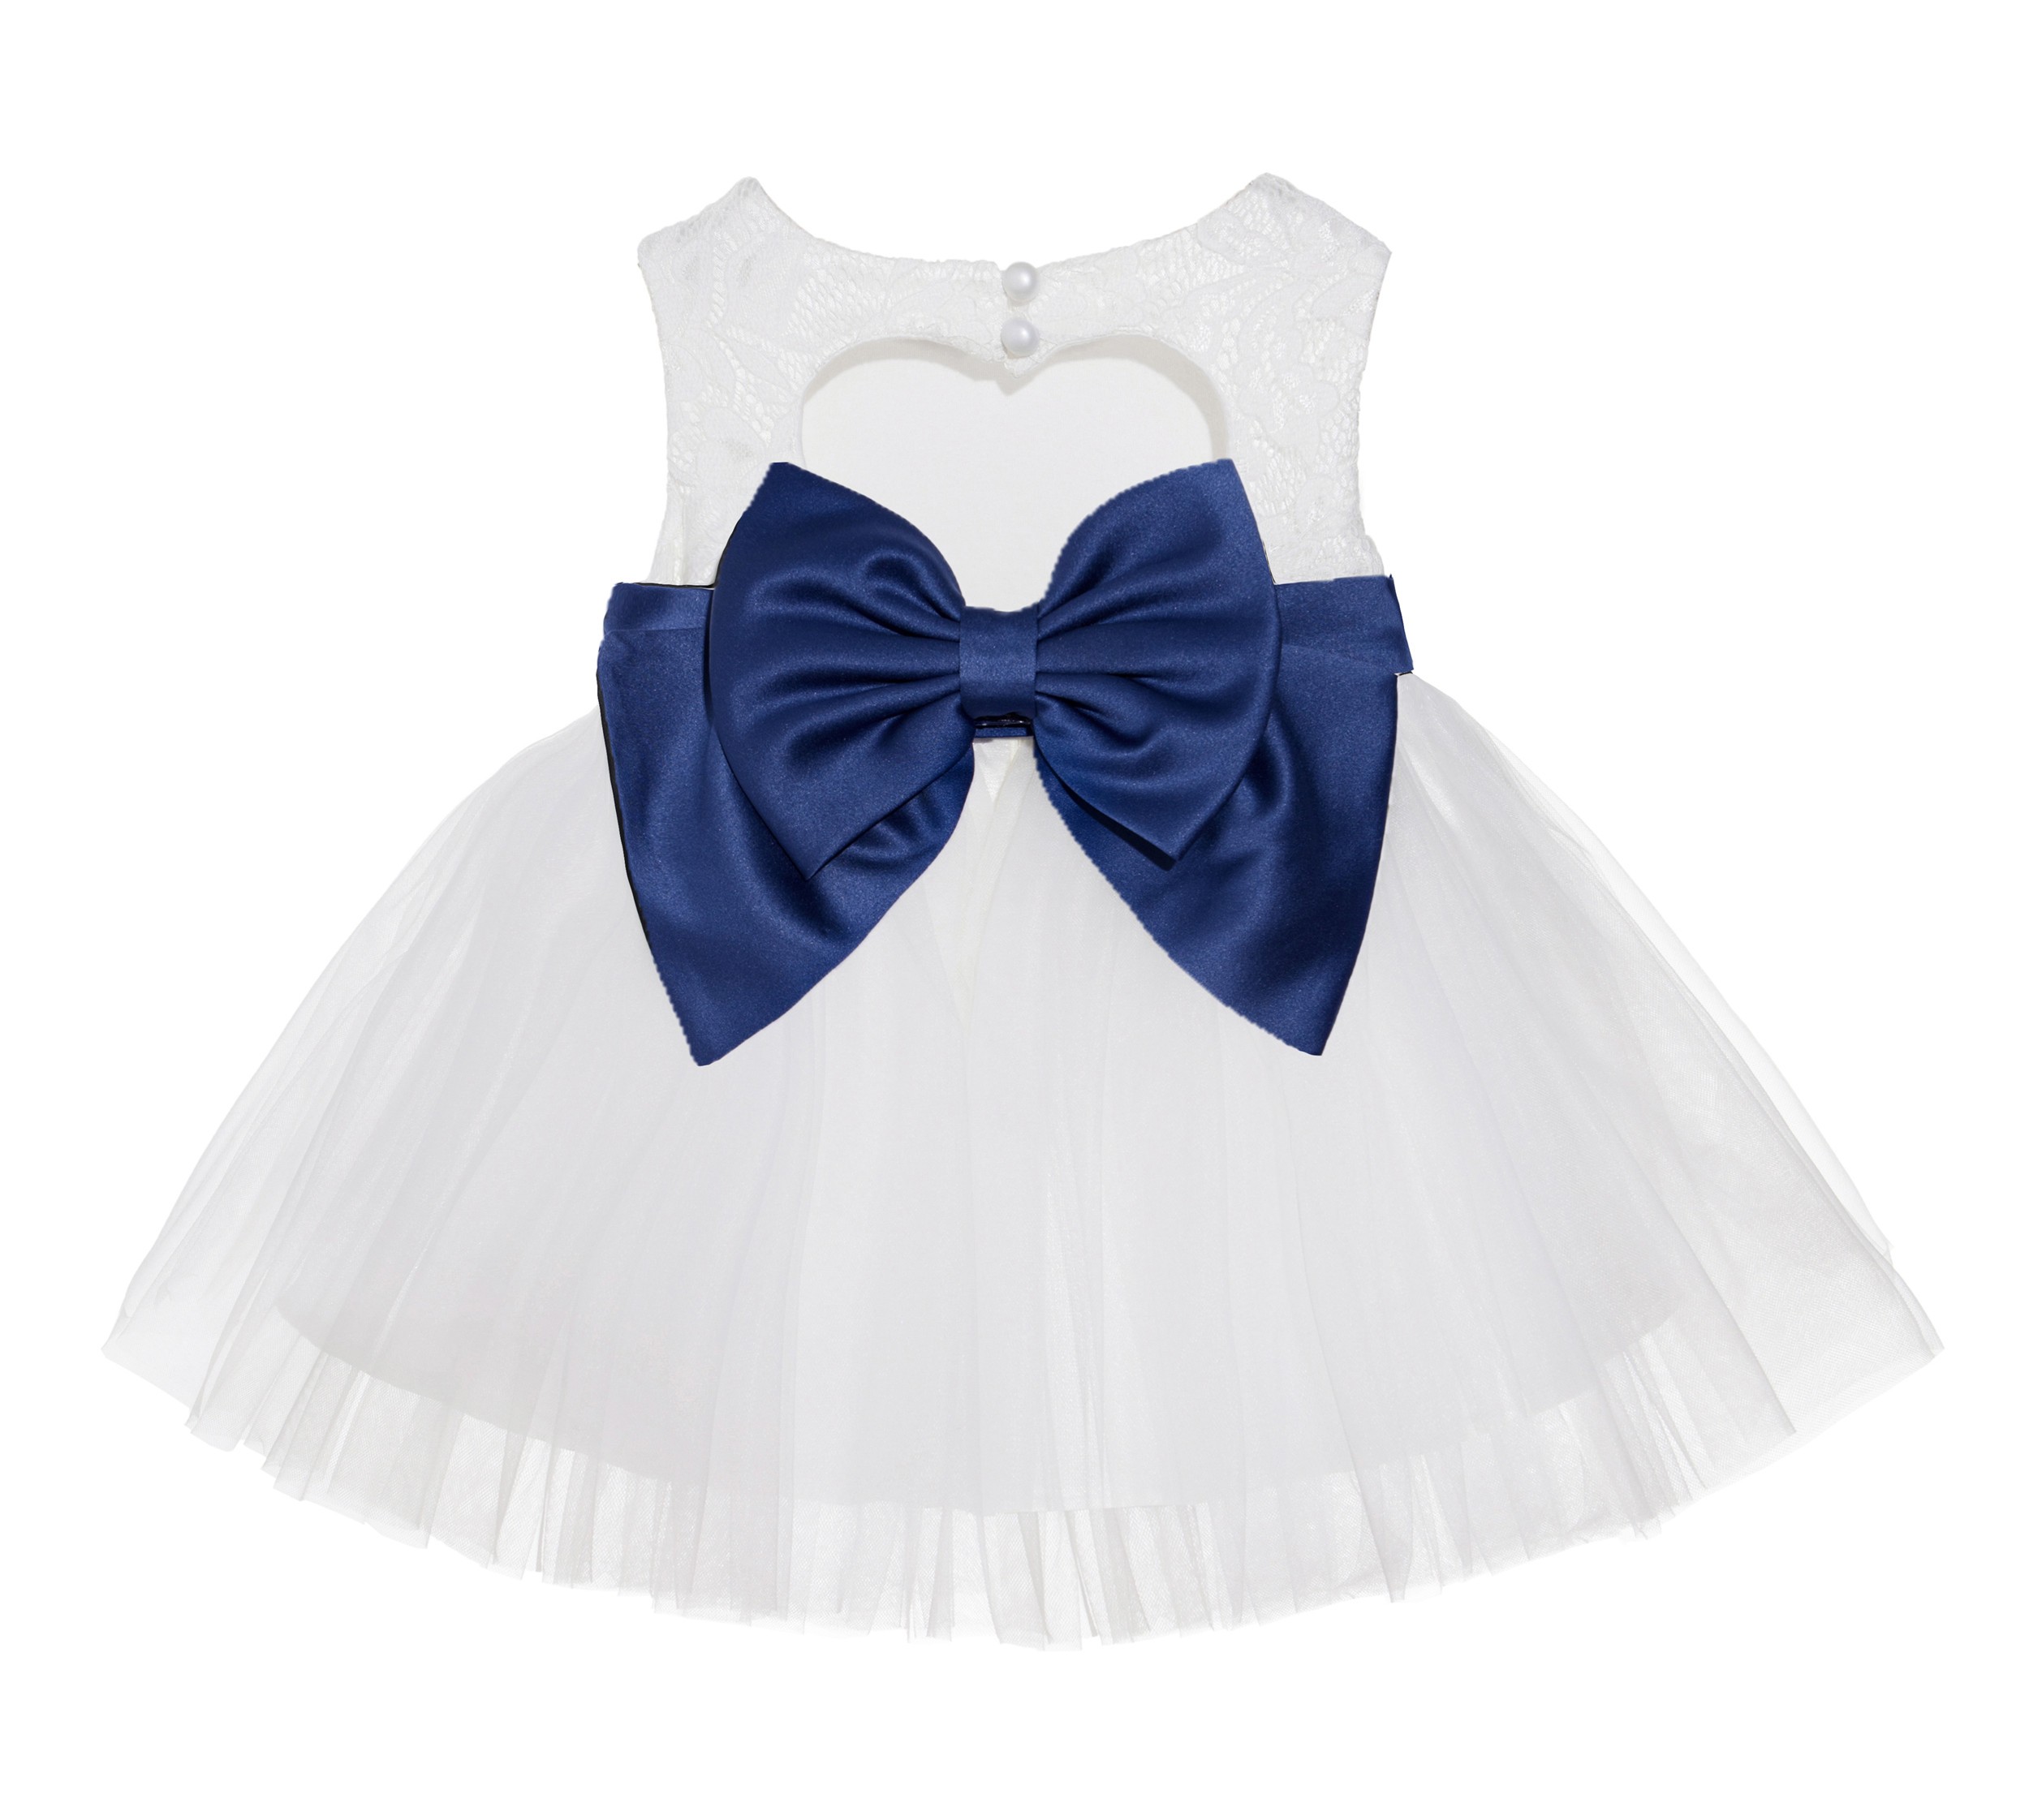 Ivory / Navy Blue Lace Heart Cutout Flower Girl Dress Baby Dress BB1